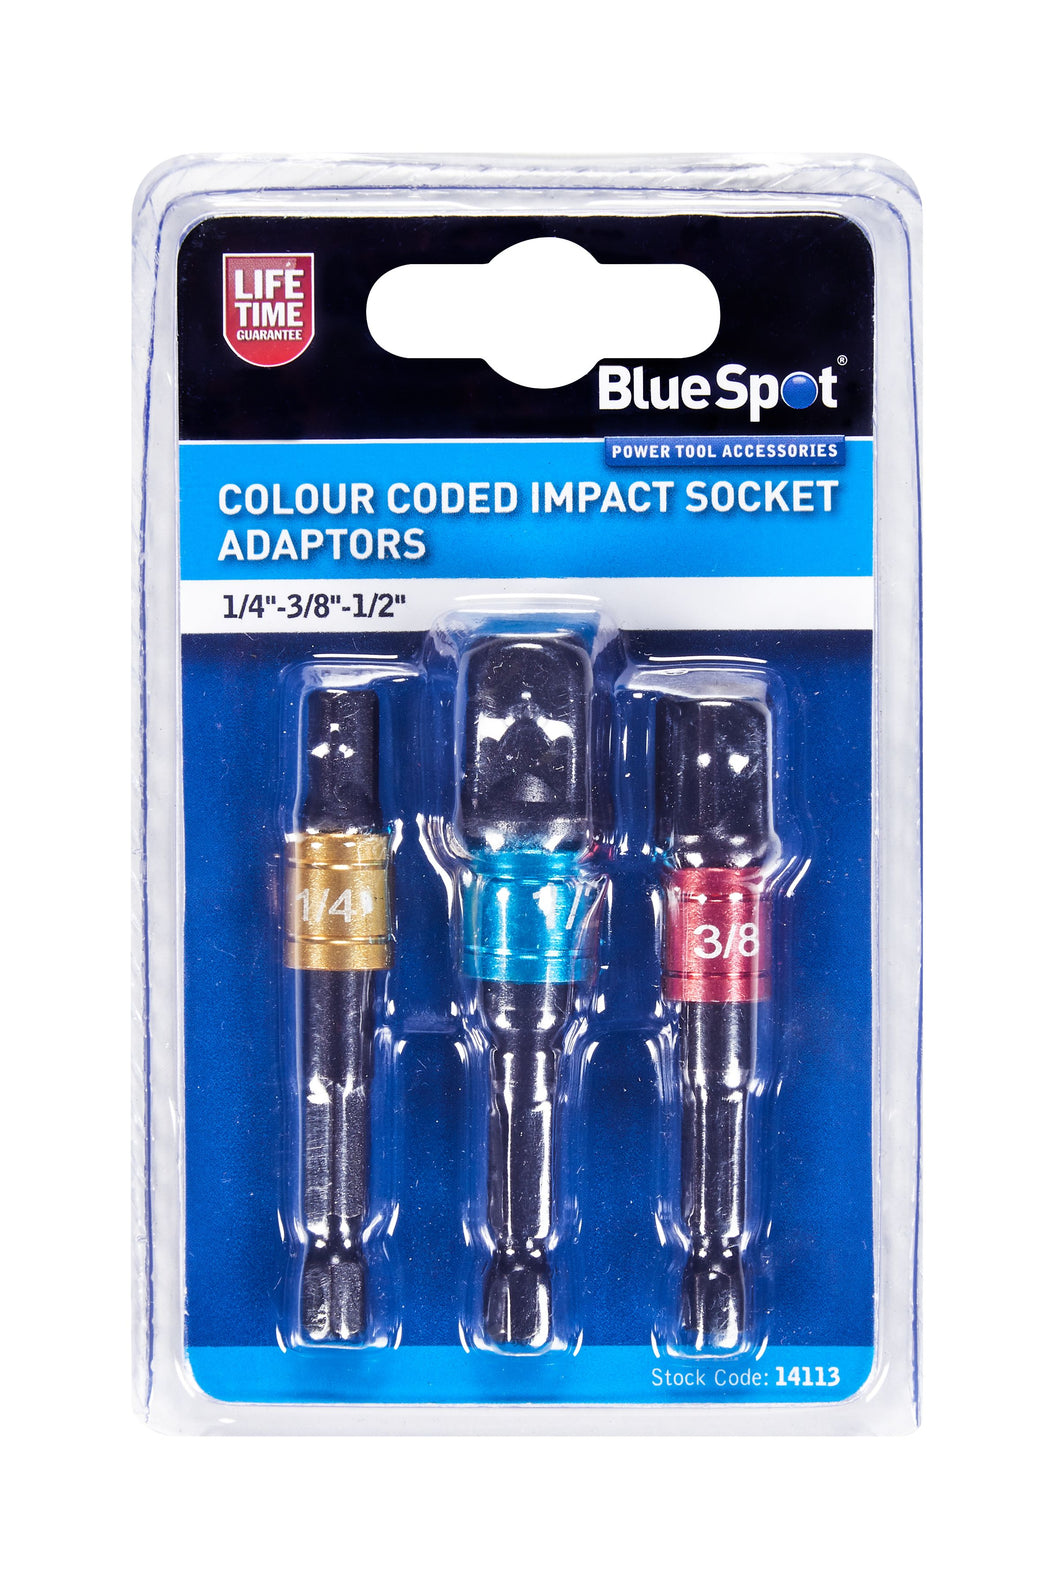 Blue Spot Colour Coded Impact Socket Adaptors (1/4-3/8-1/2)